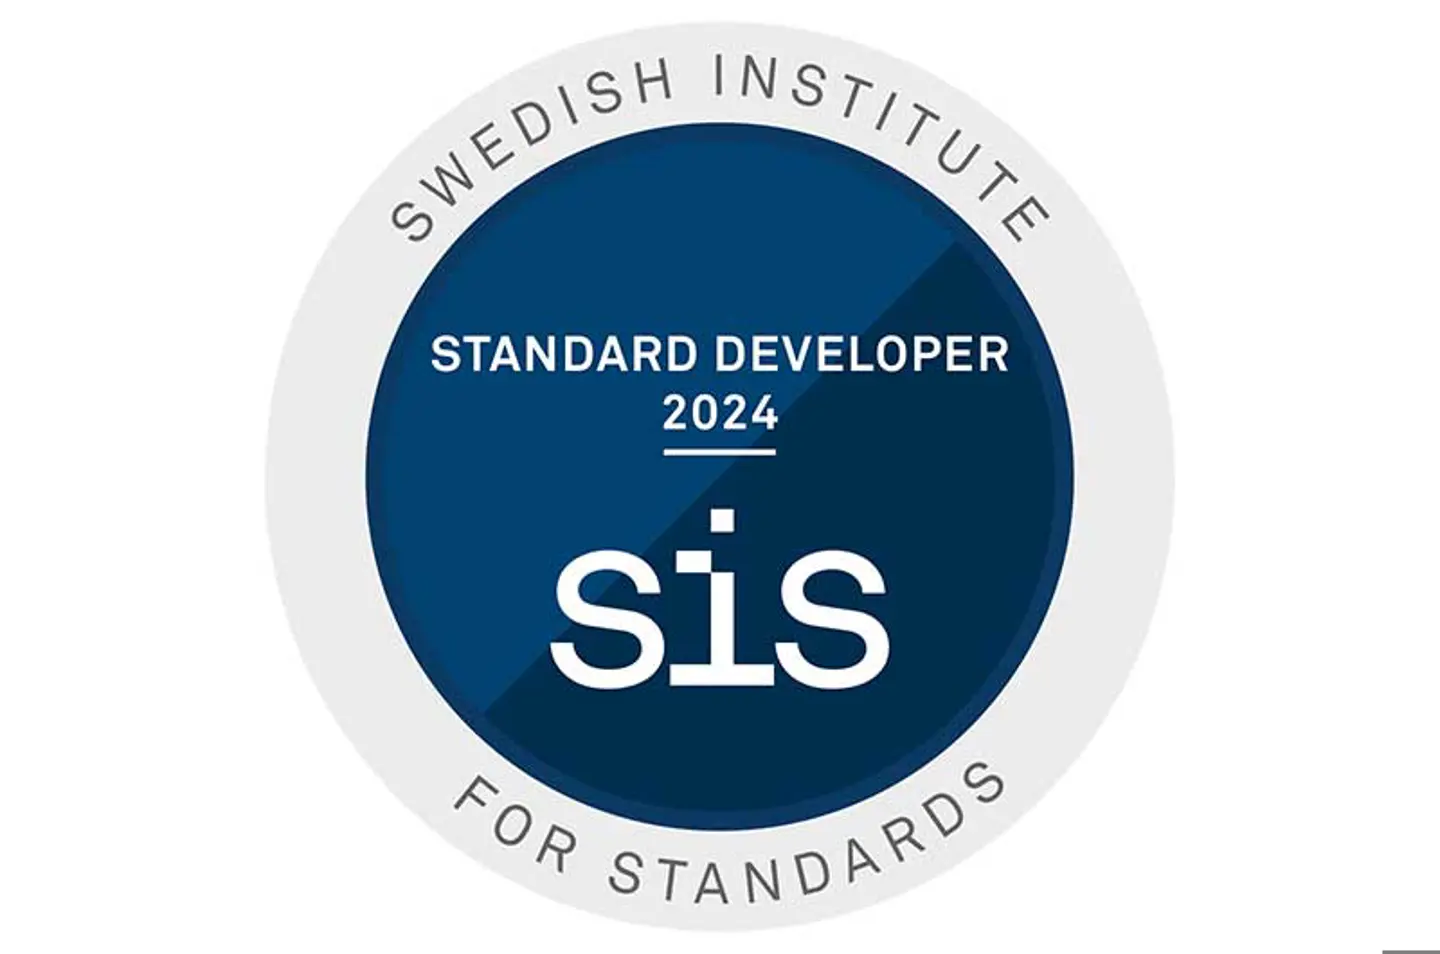 Swedish institute for standards